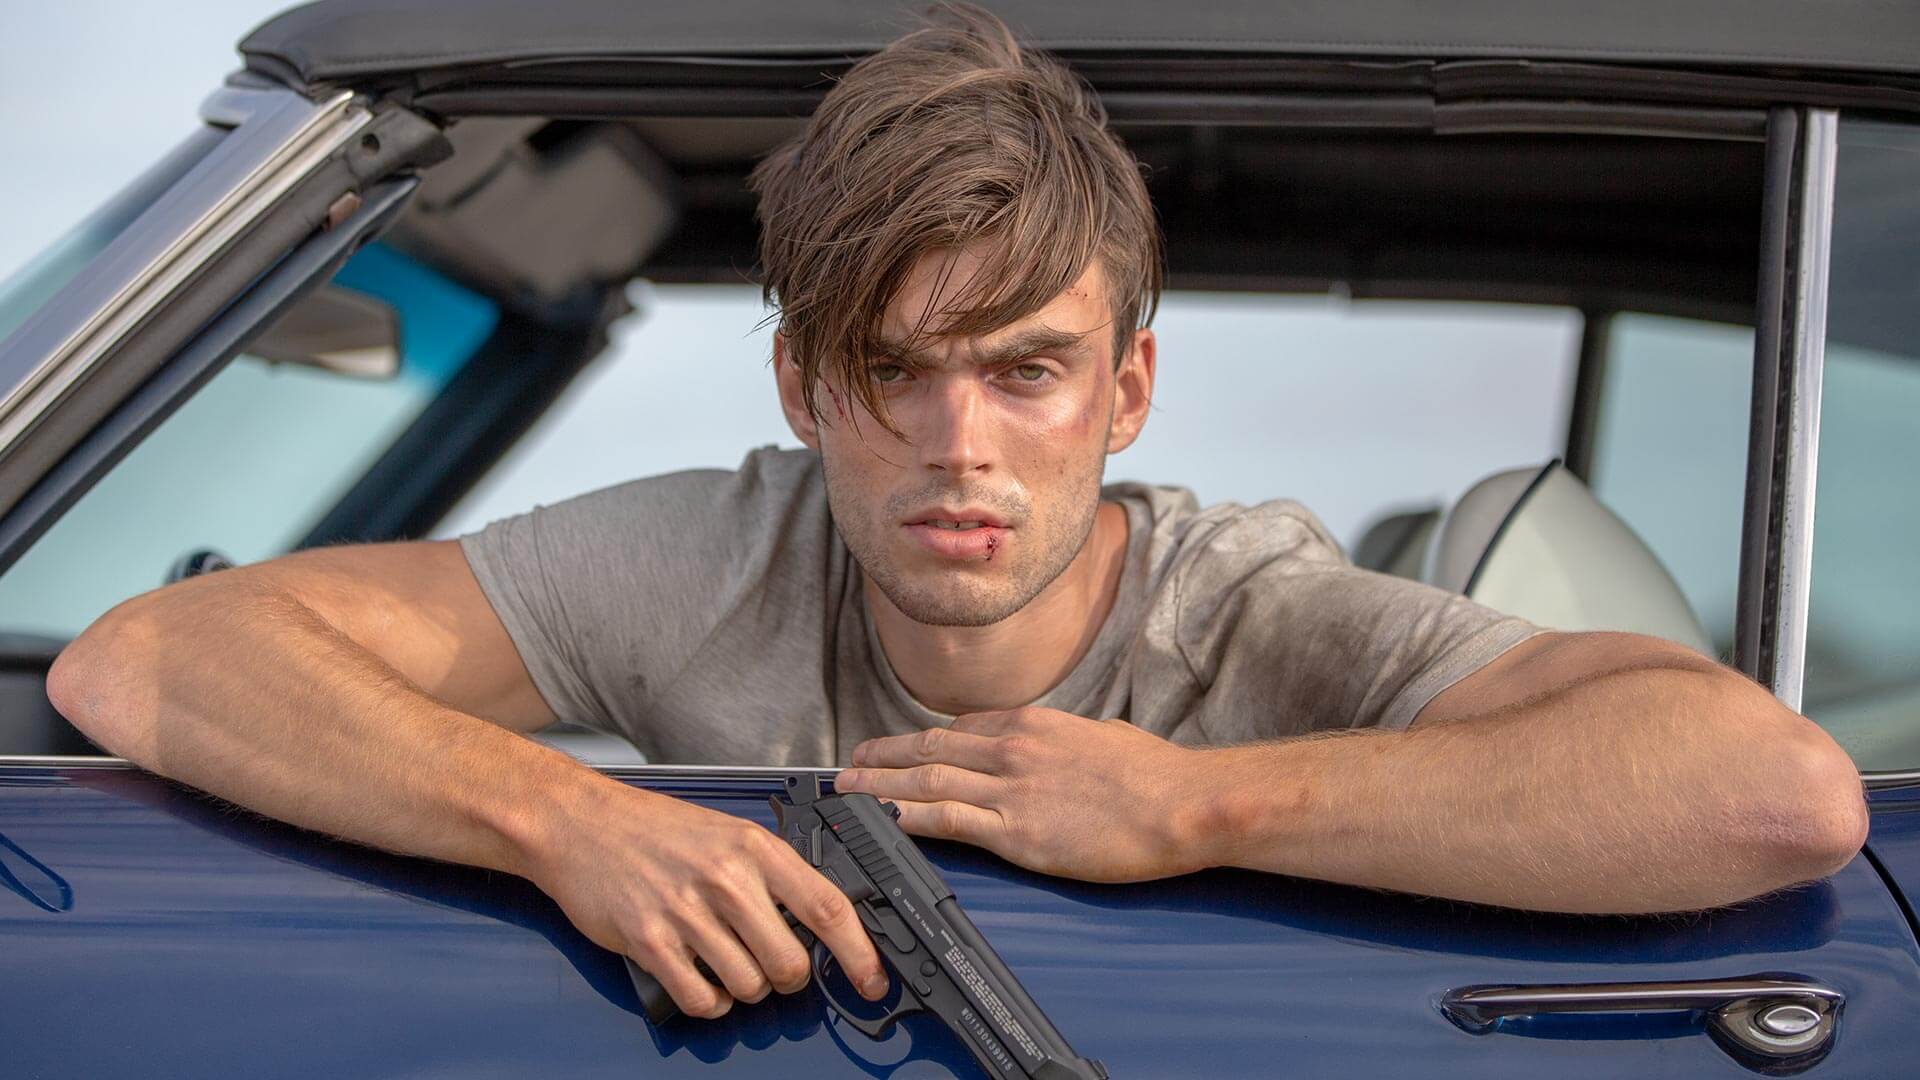 Man in car with gun - Clarity effect original